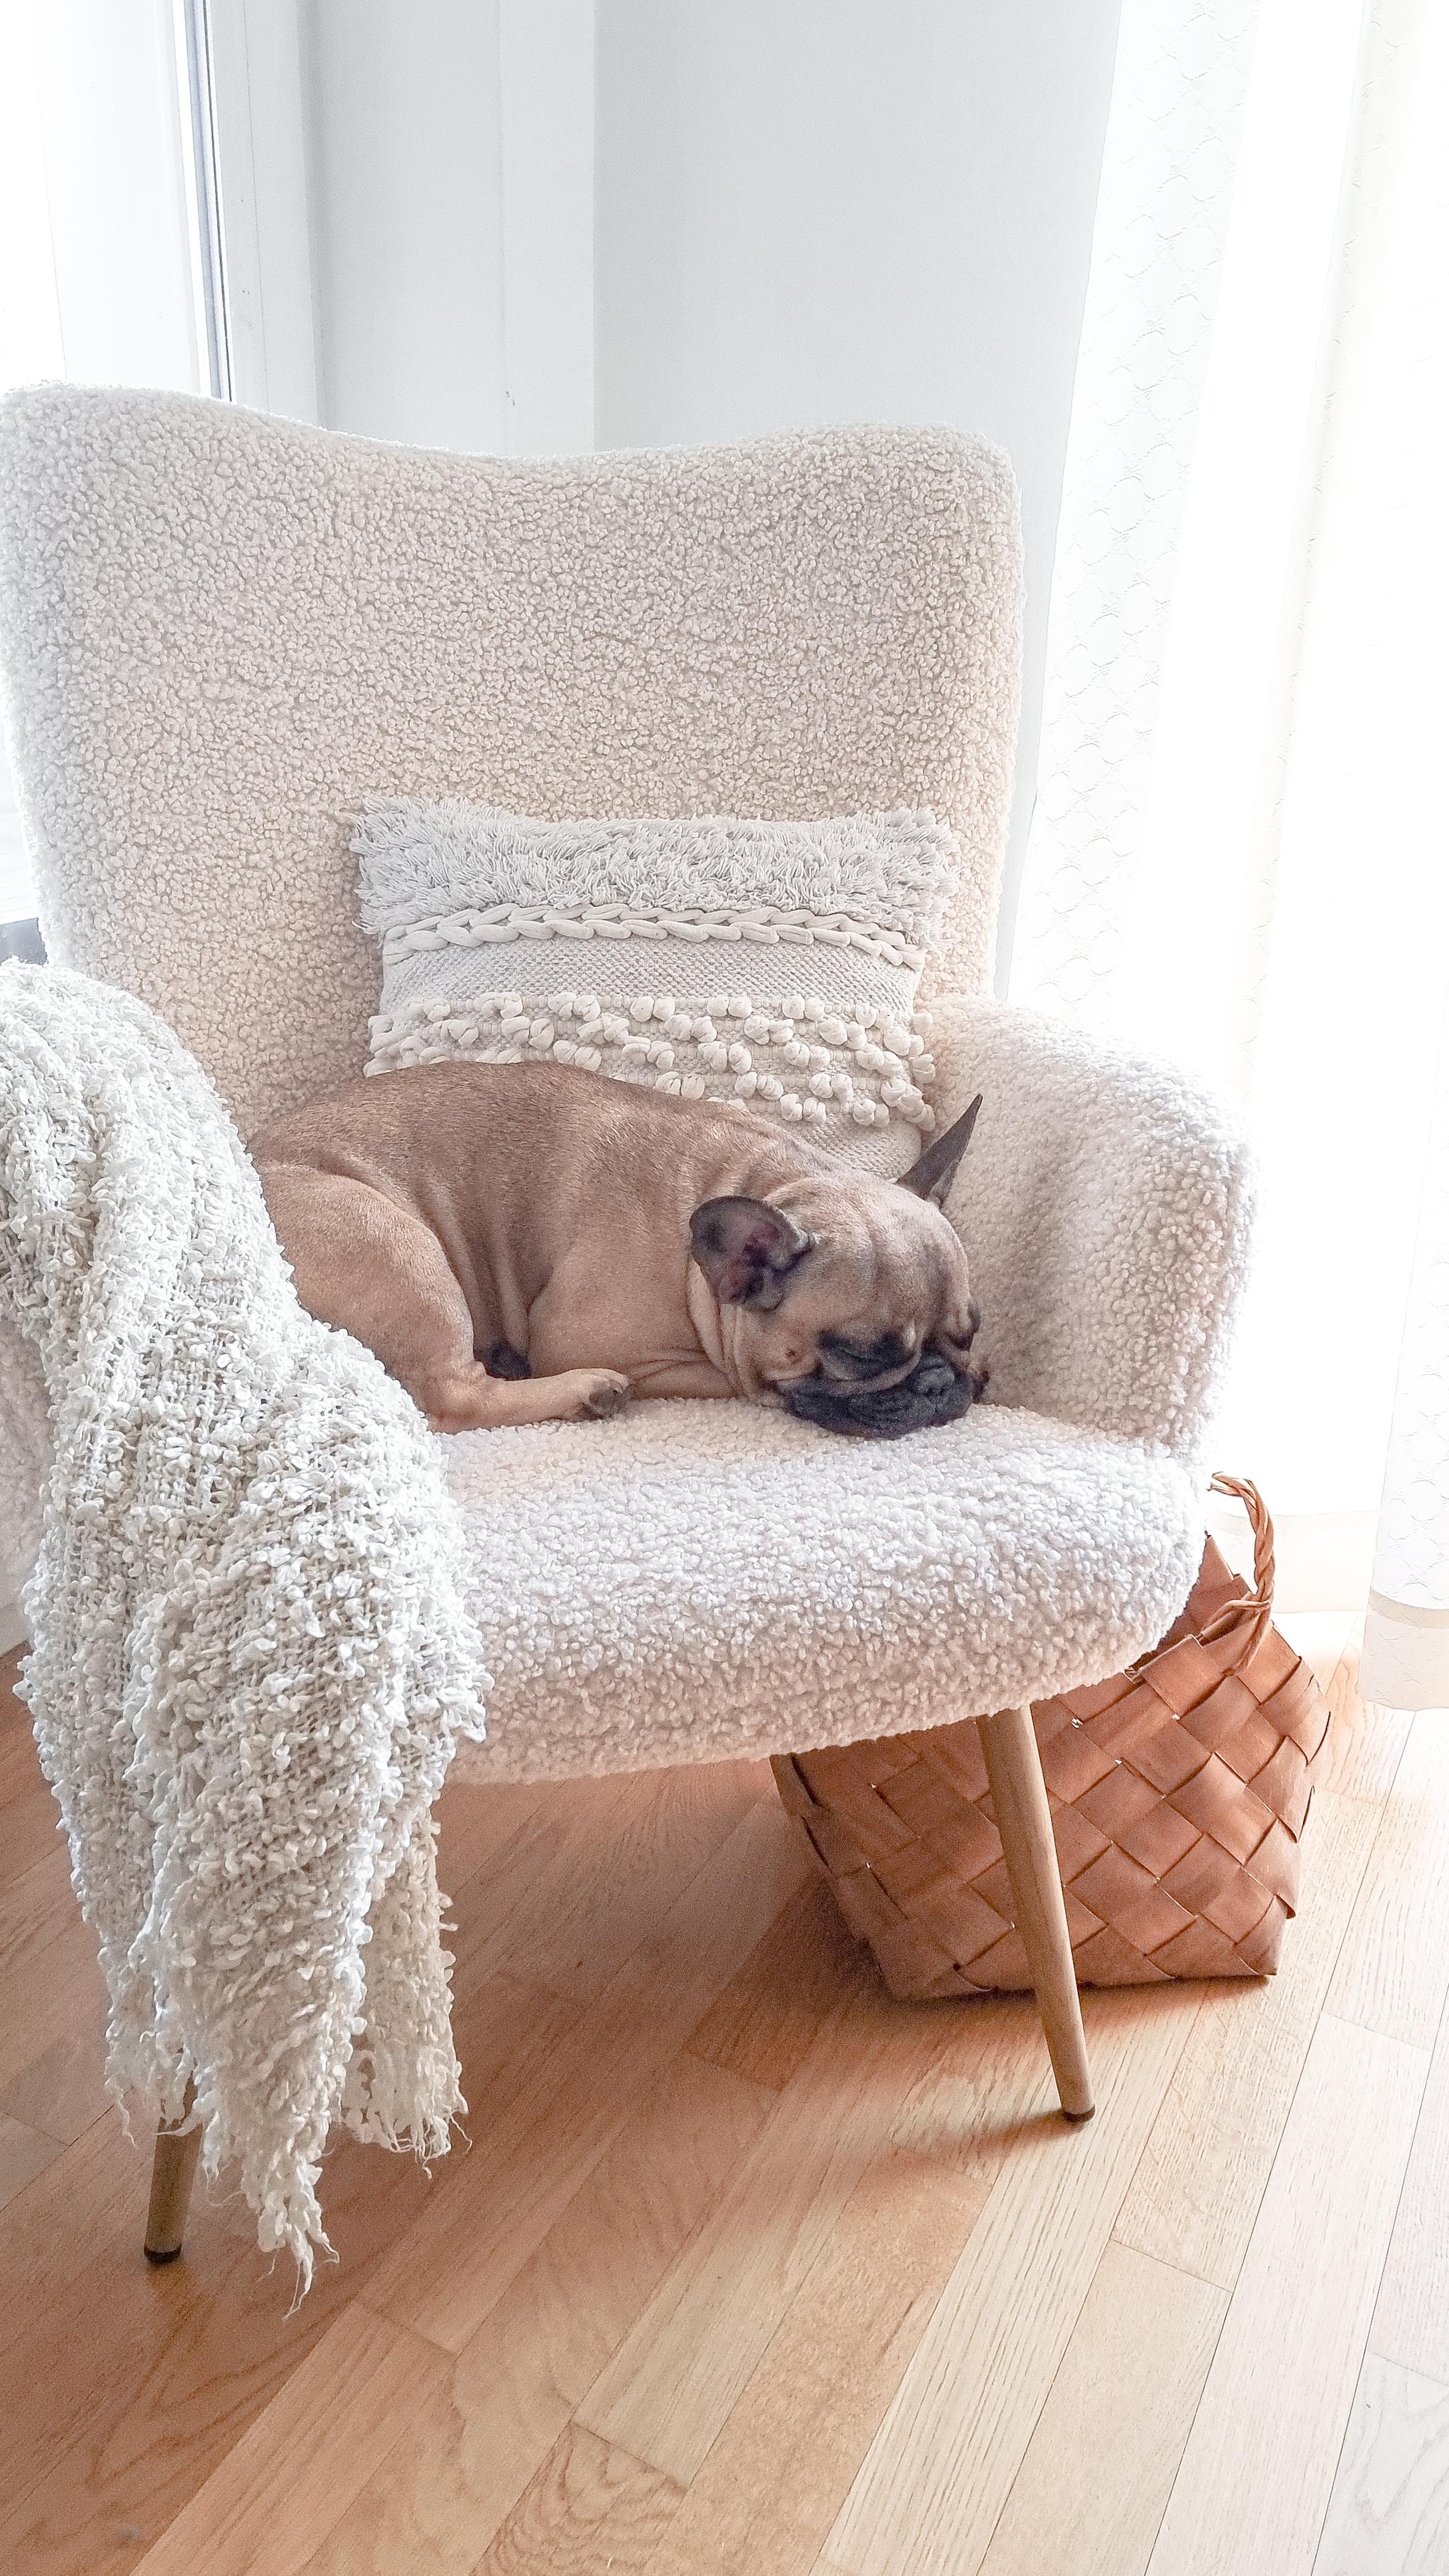 Unsere Eve🐶
Sie liebt den neuen Sessel mit Bouclé Stoff.
#inspohome #mynordicroom #homedecorblogger #couchmagazin #home